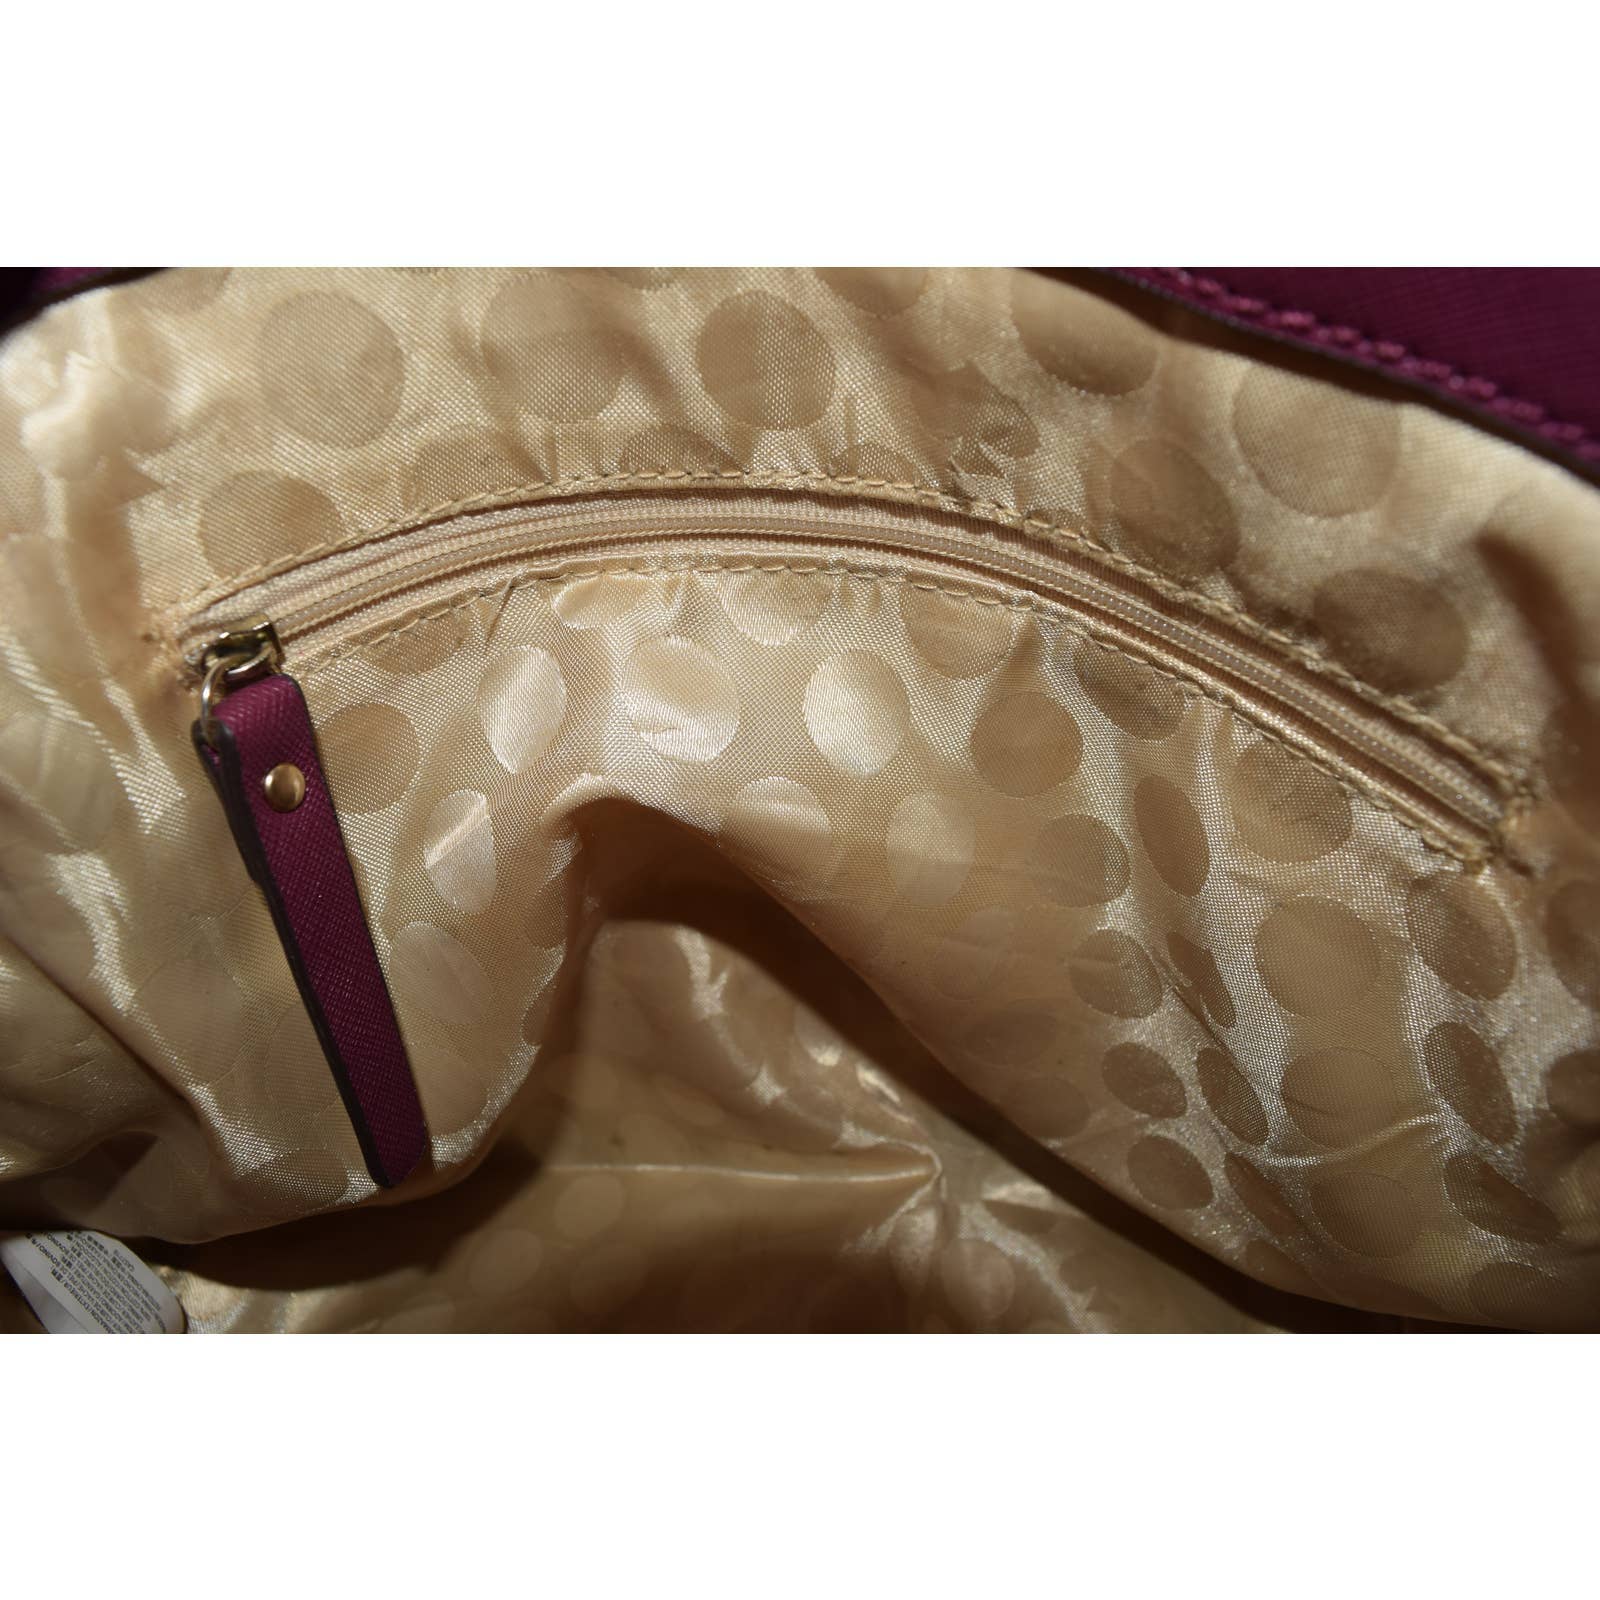 Kate Spade Purple Lined Handbag